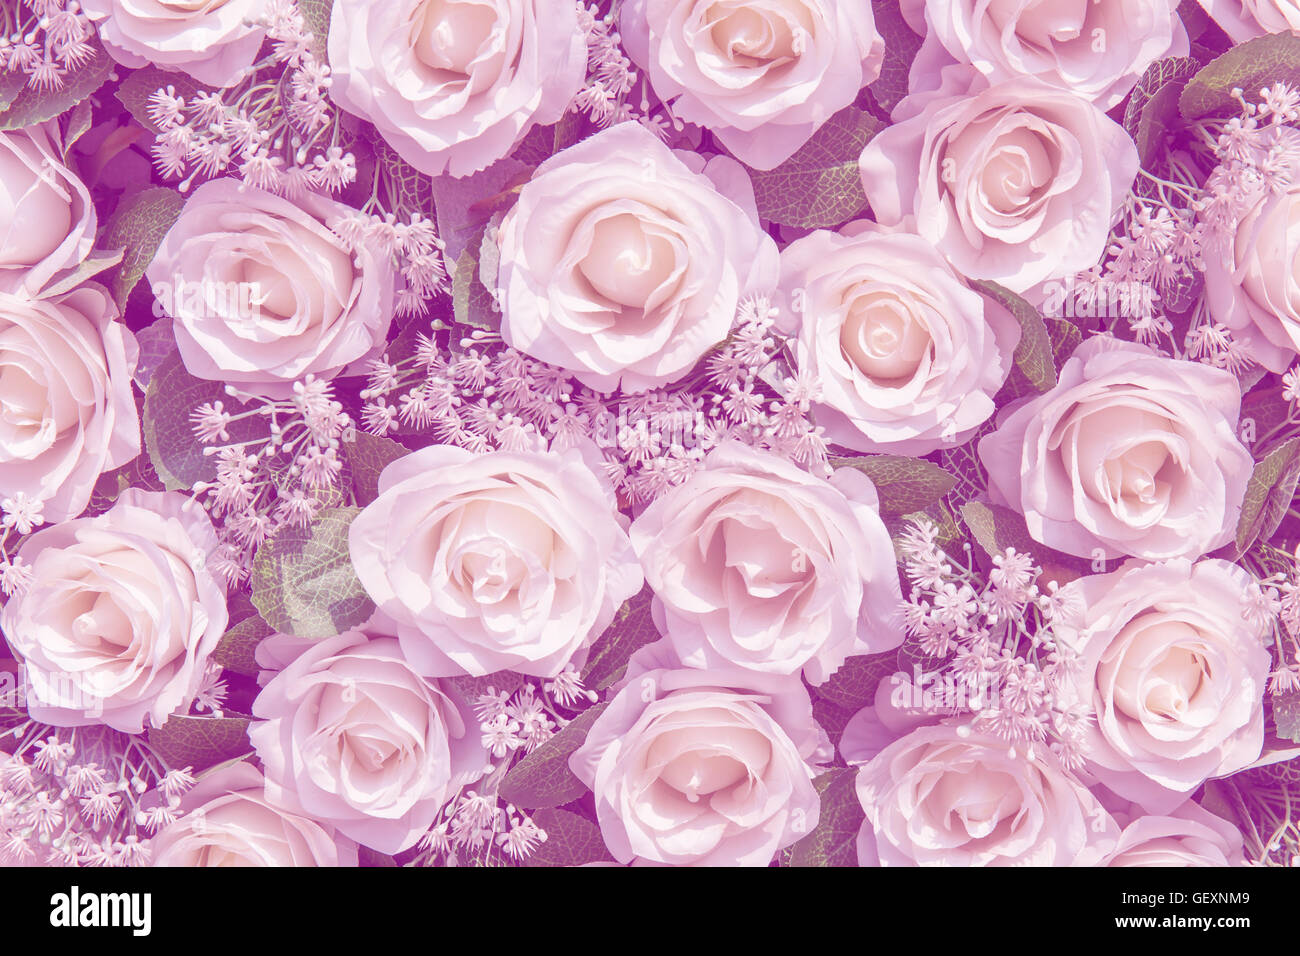 White roses as a background pastel tone Stock Photo